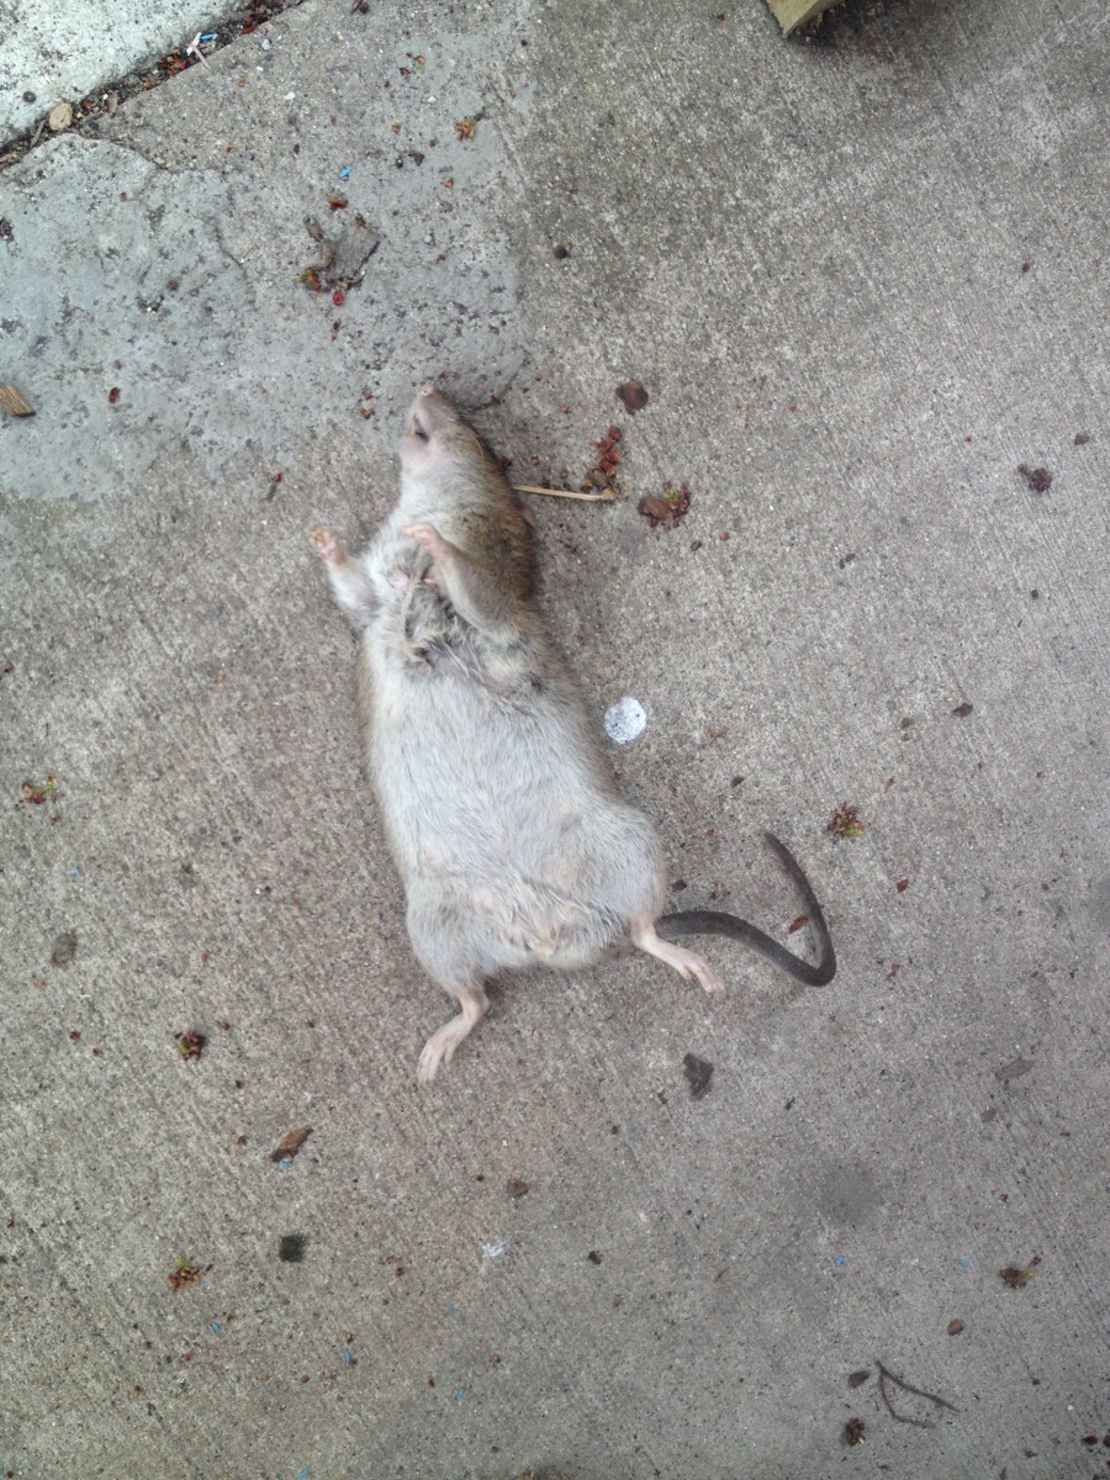 https://media.cnn.com/api/v1/images/stellar/prod/160712120657-dead-rat-in-chicago.jpg?q=w_1110,c_fill